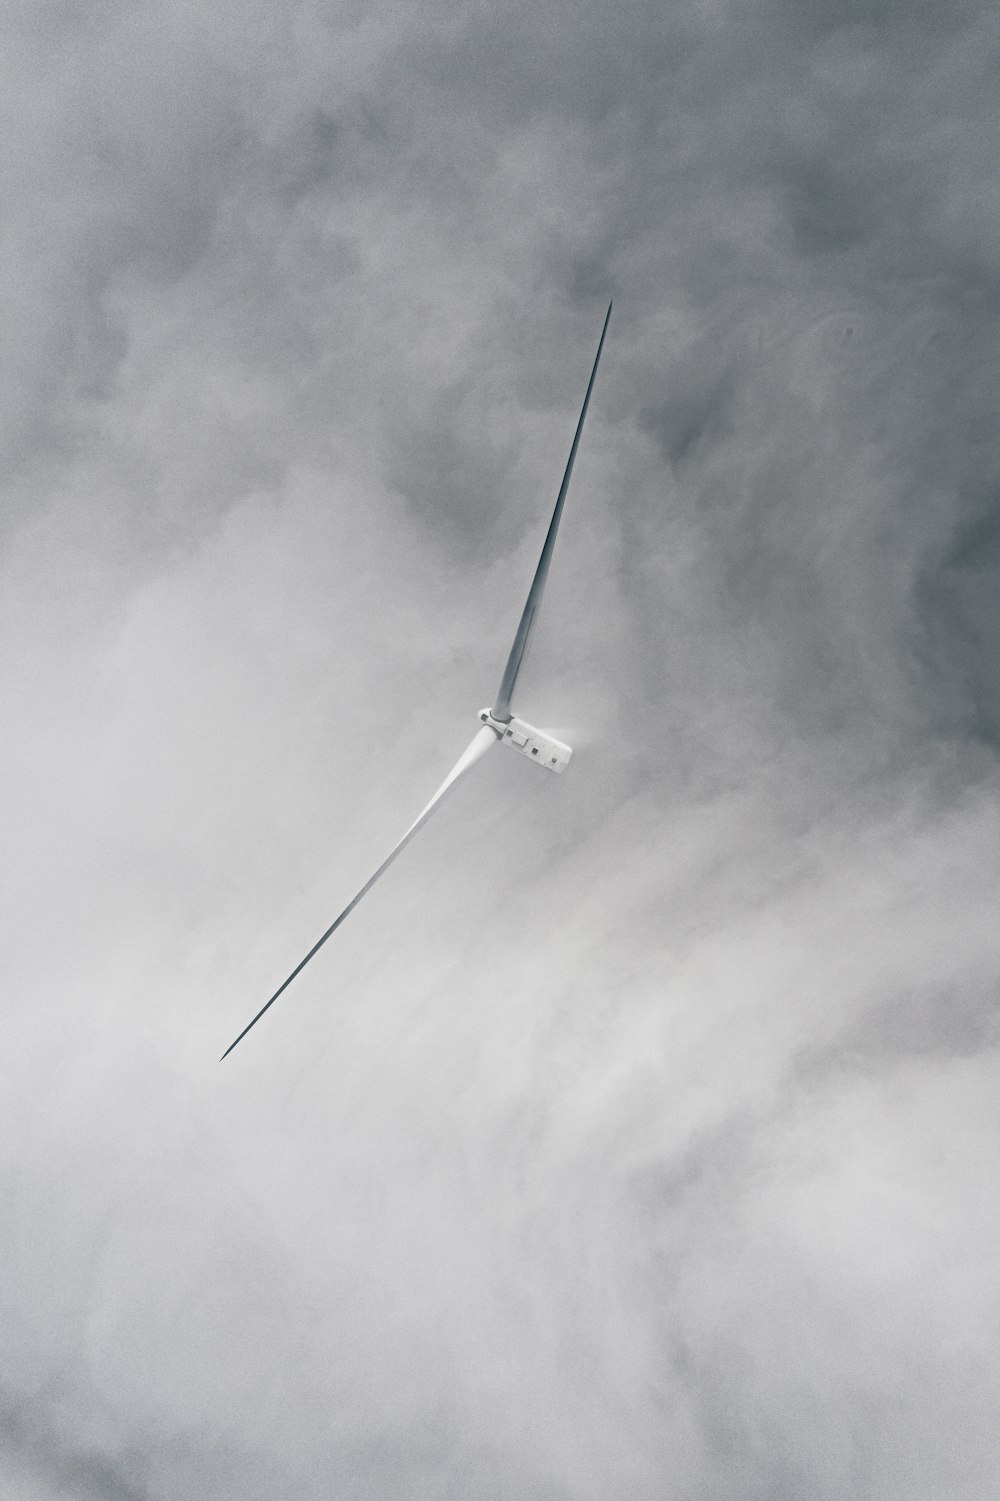 a wind turbine flying through a cloudy sky